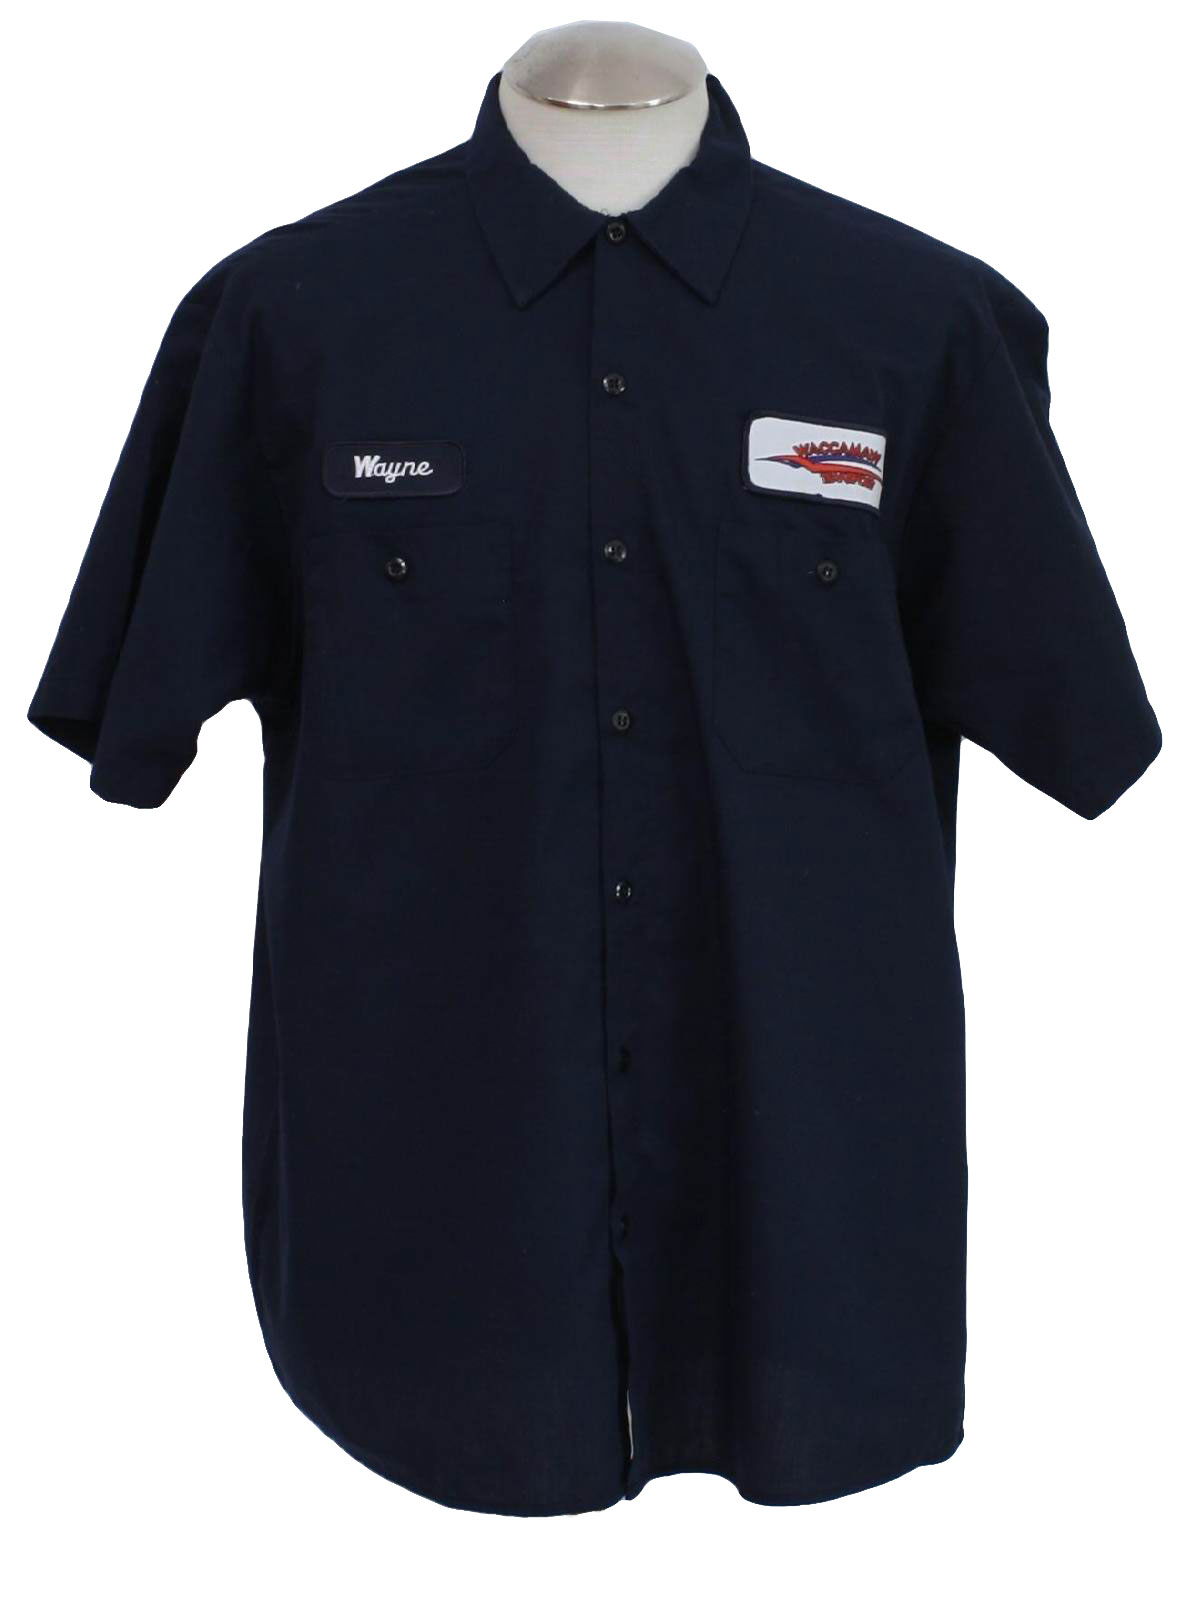 90s Retro Shirt: 90s -Cintas- Mens navy blue, shortsleeve, button front ...